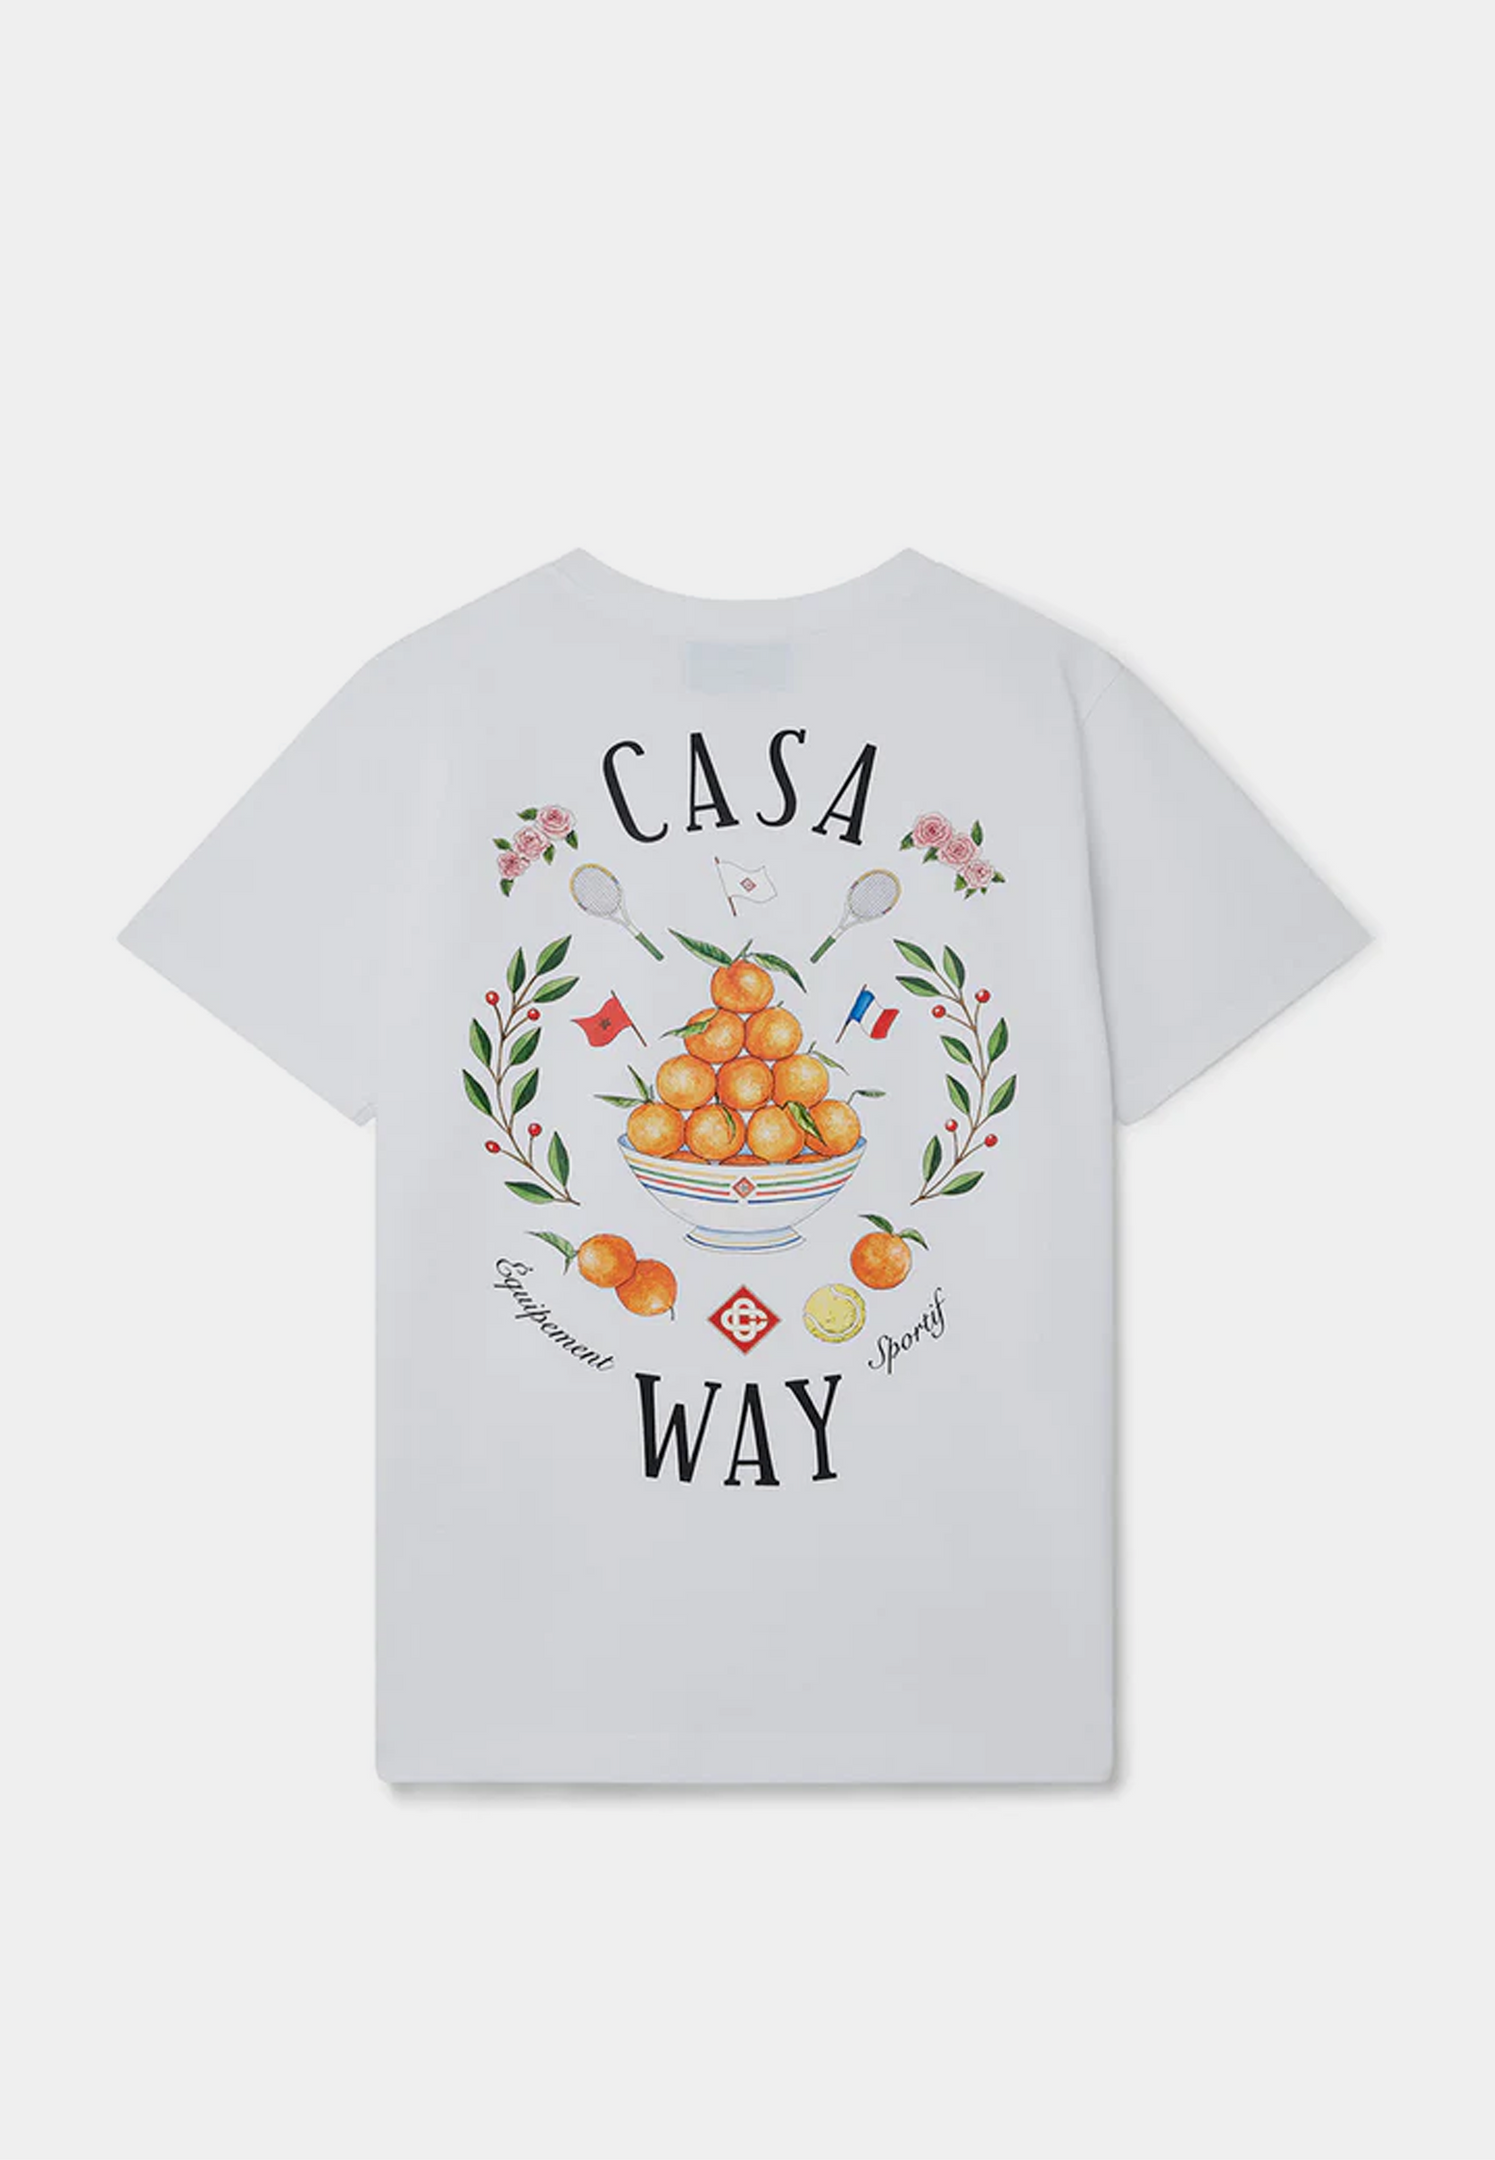 Casablanca Casa Way Printed T-Shirt White